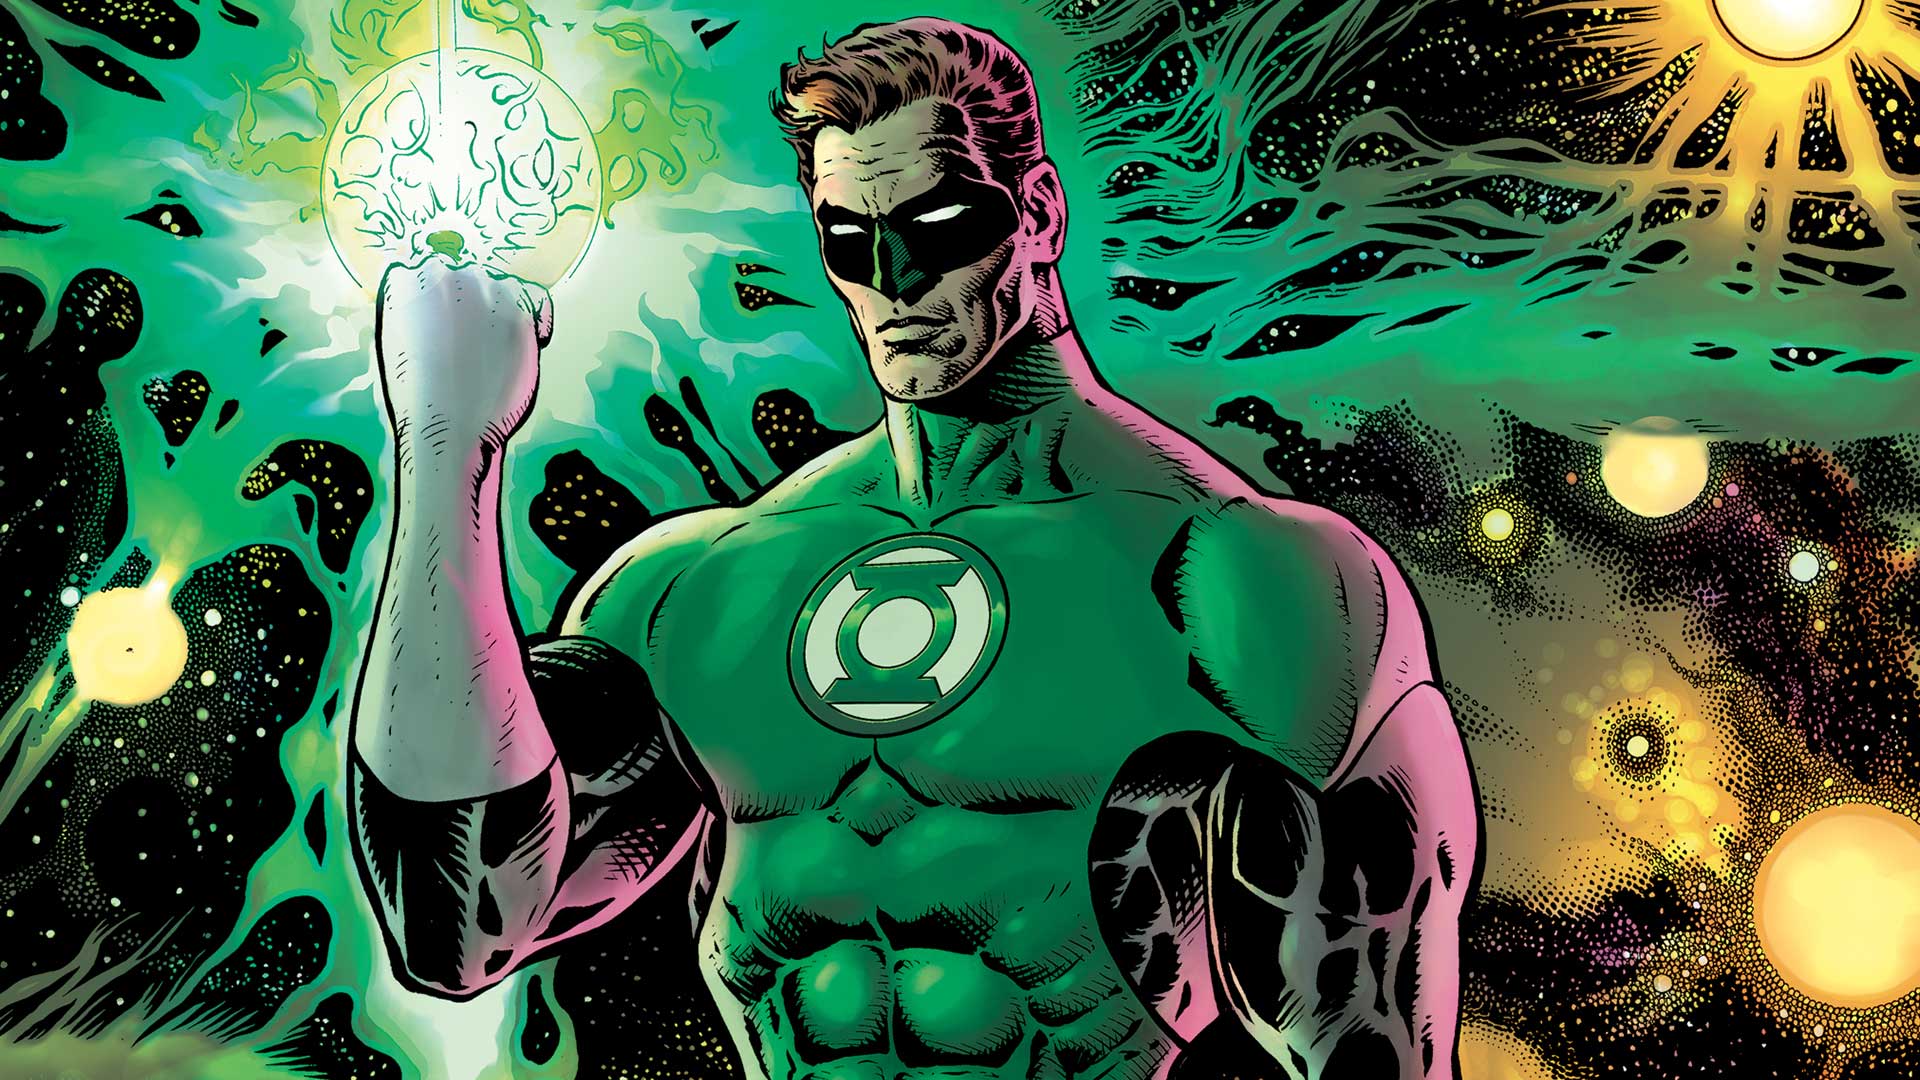 Grant Morrison Reenergizes The Green Lantern